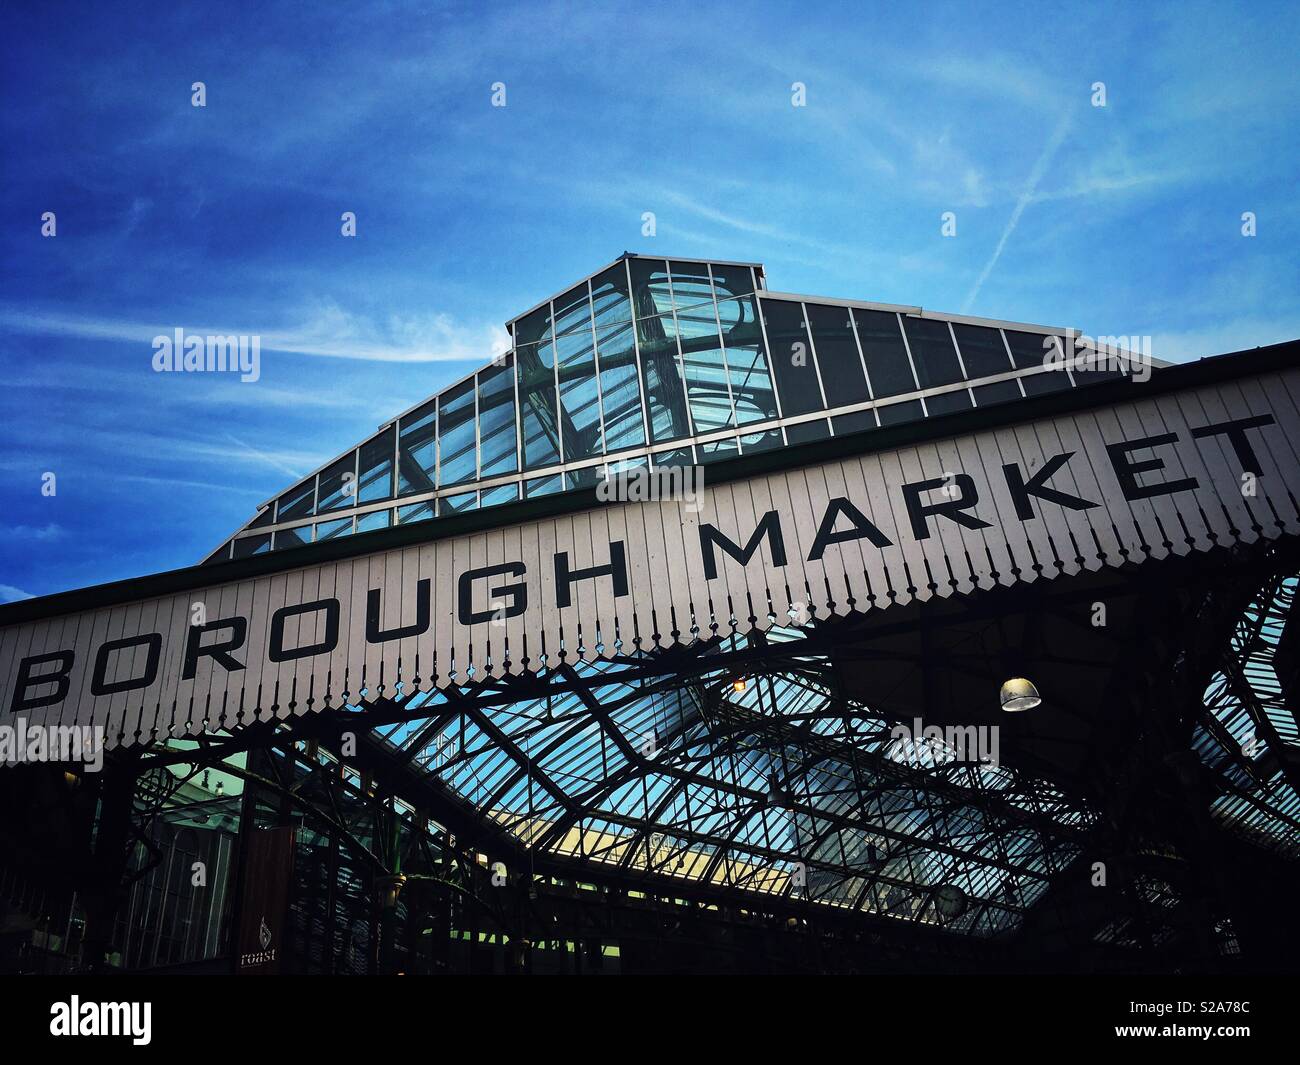 Borough Market in London, England Stock Photo